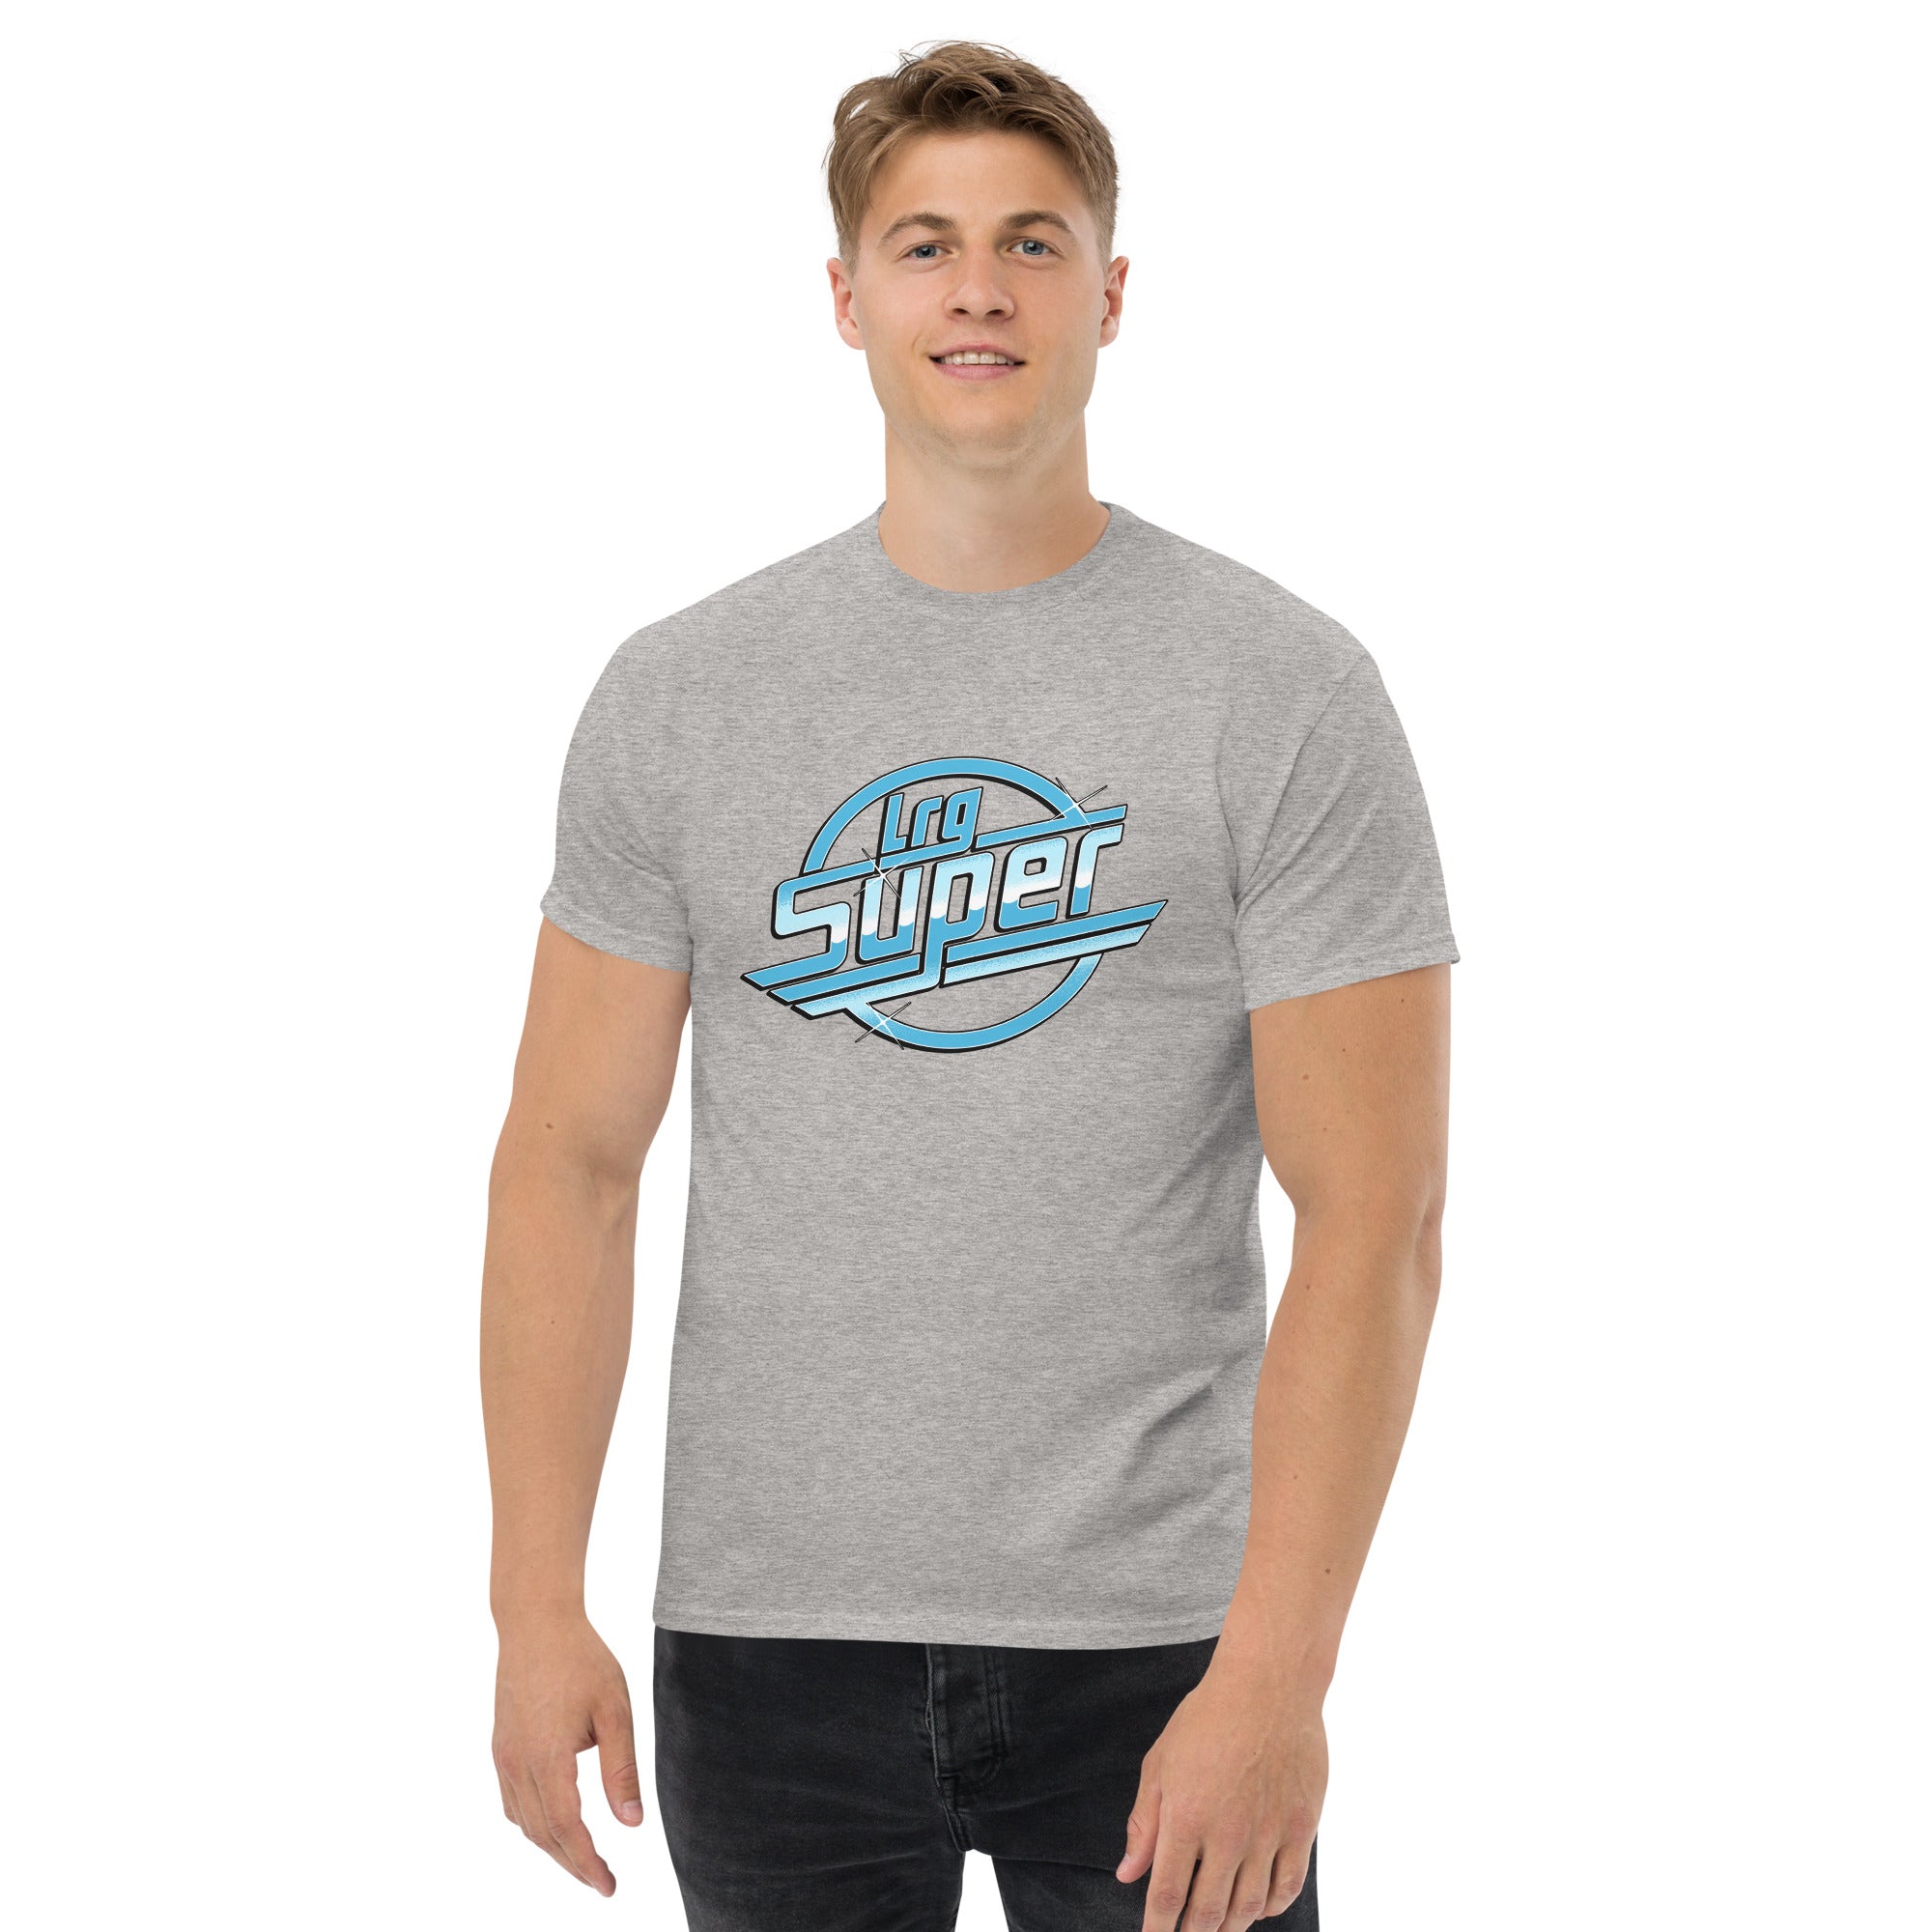 Metallic Shield Lrg Super T-Shirt